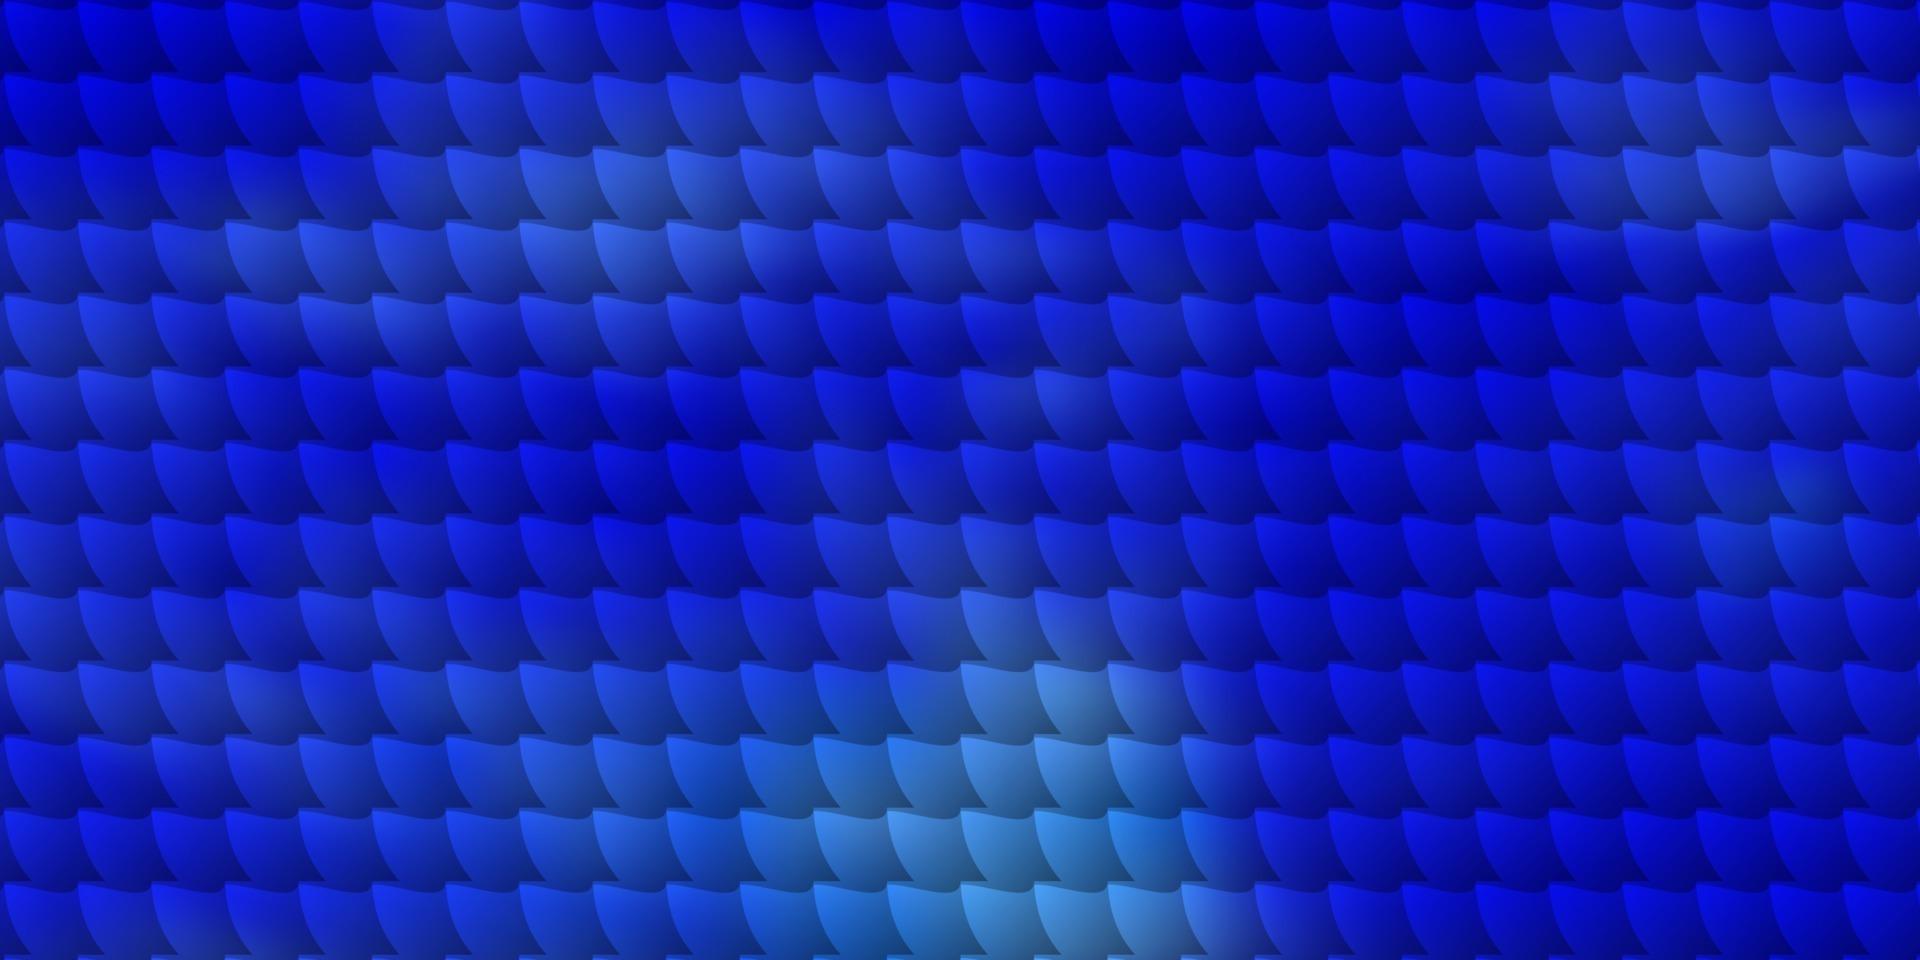 mörkblå vektorbakgrund i polygonal stil. vektor